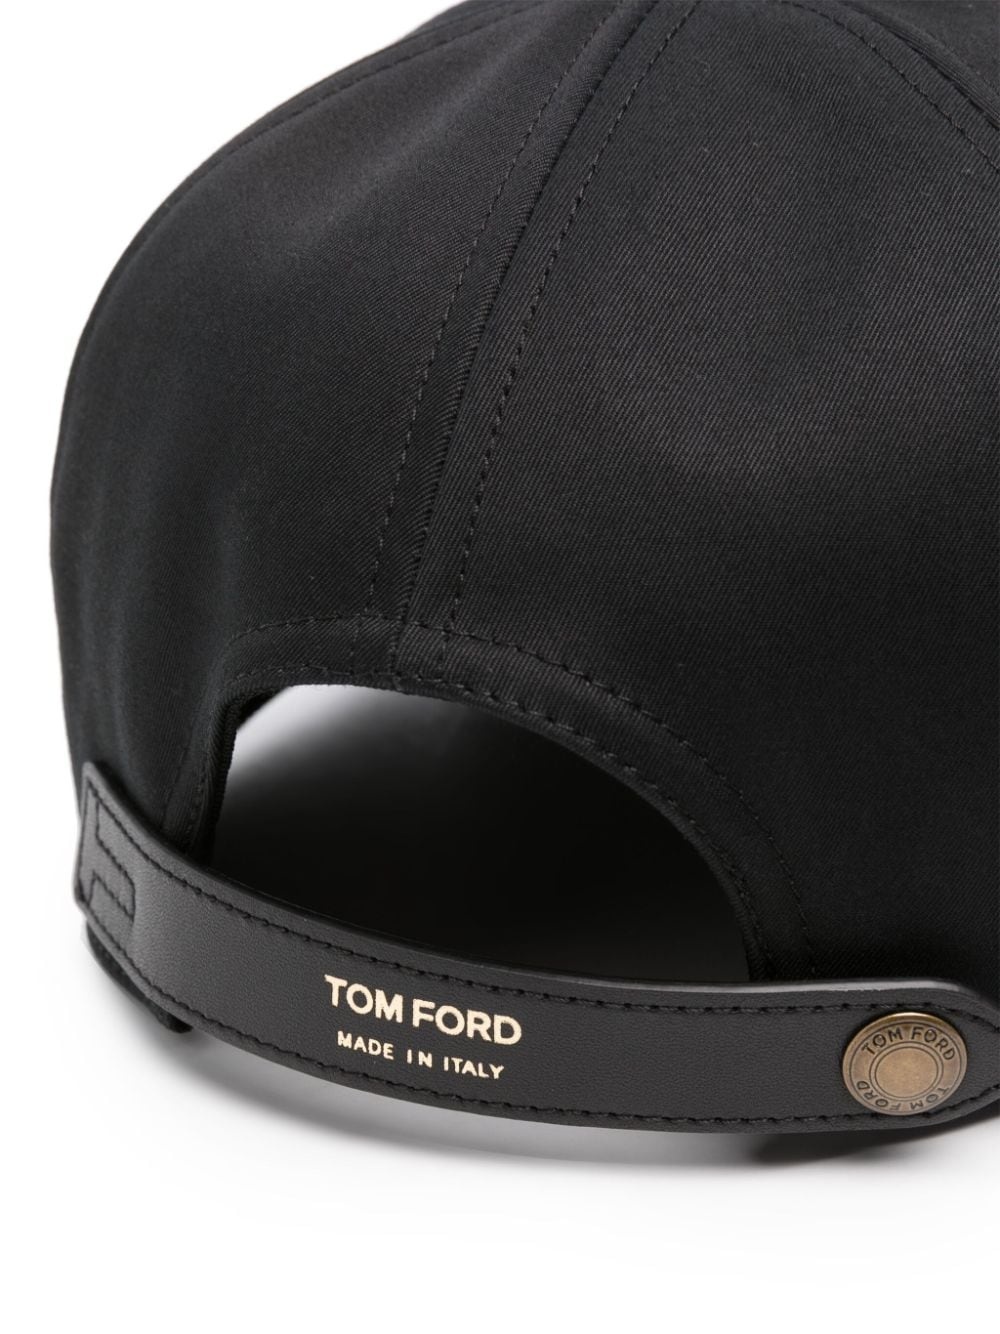 TOM FORD BLACK LOGO CAP - 2